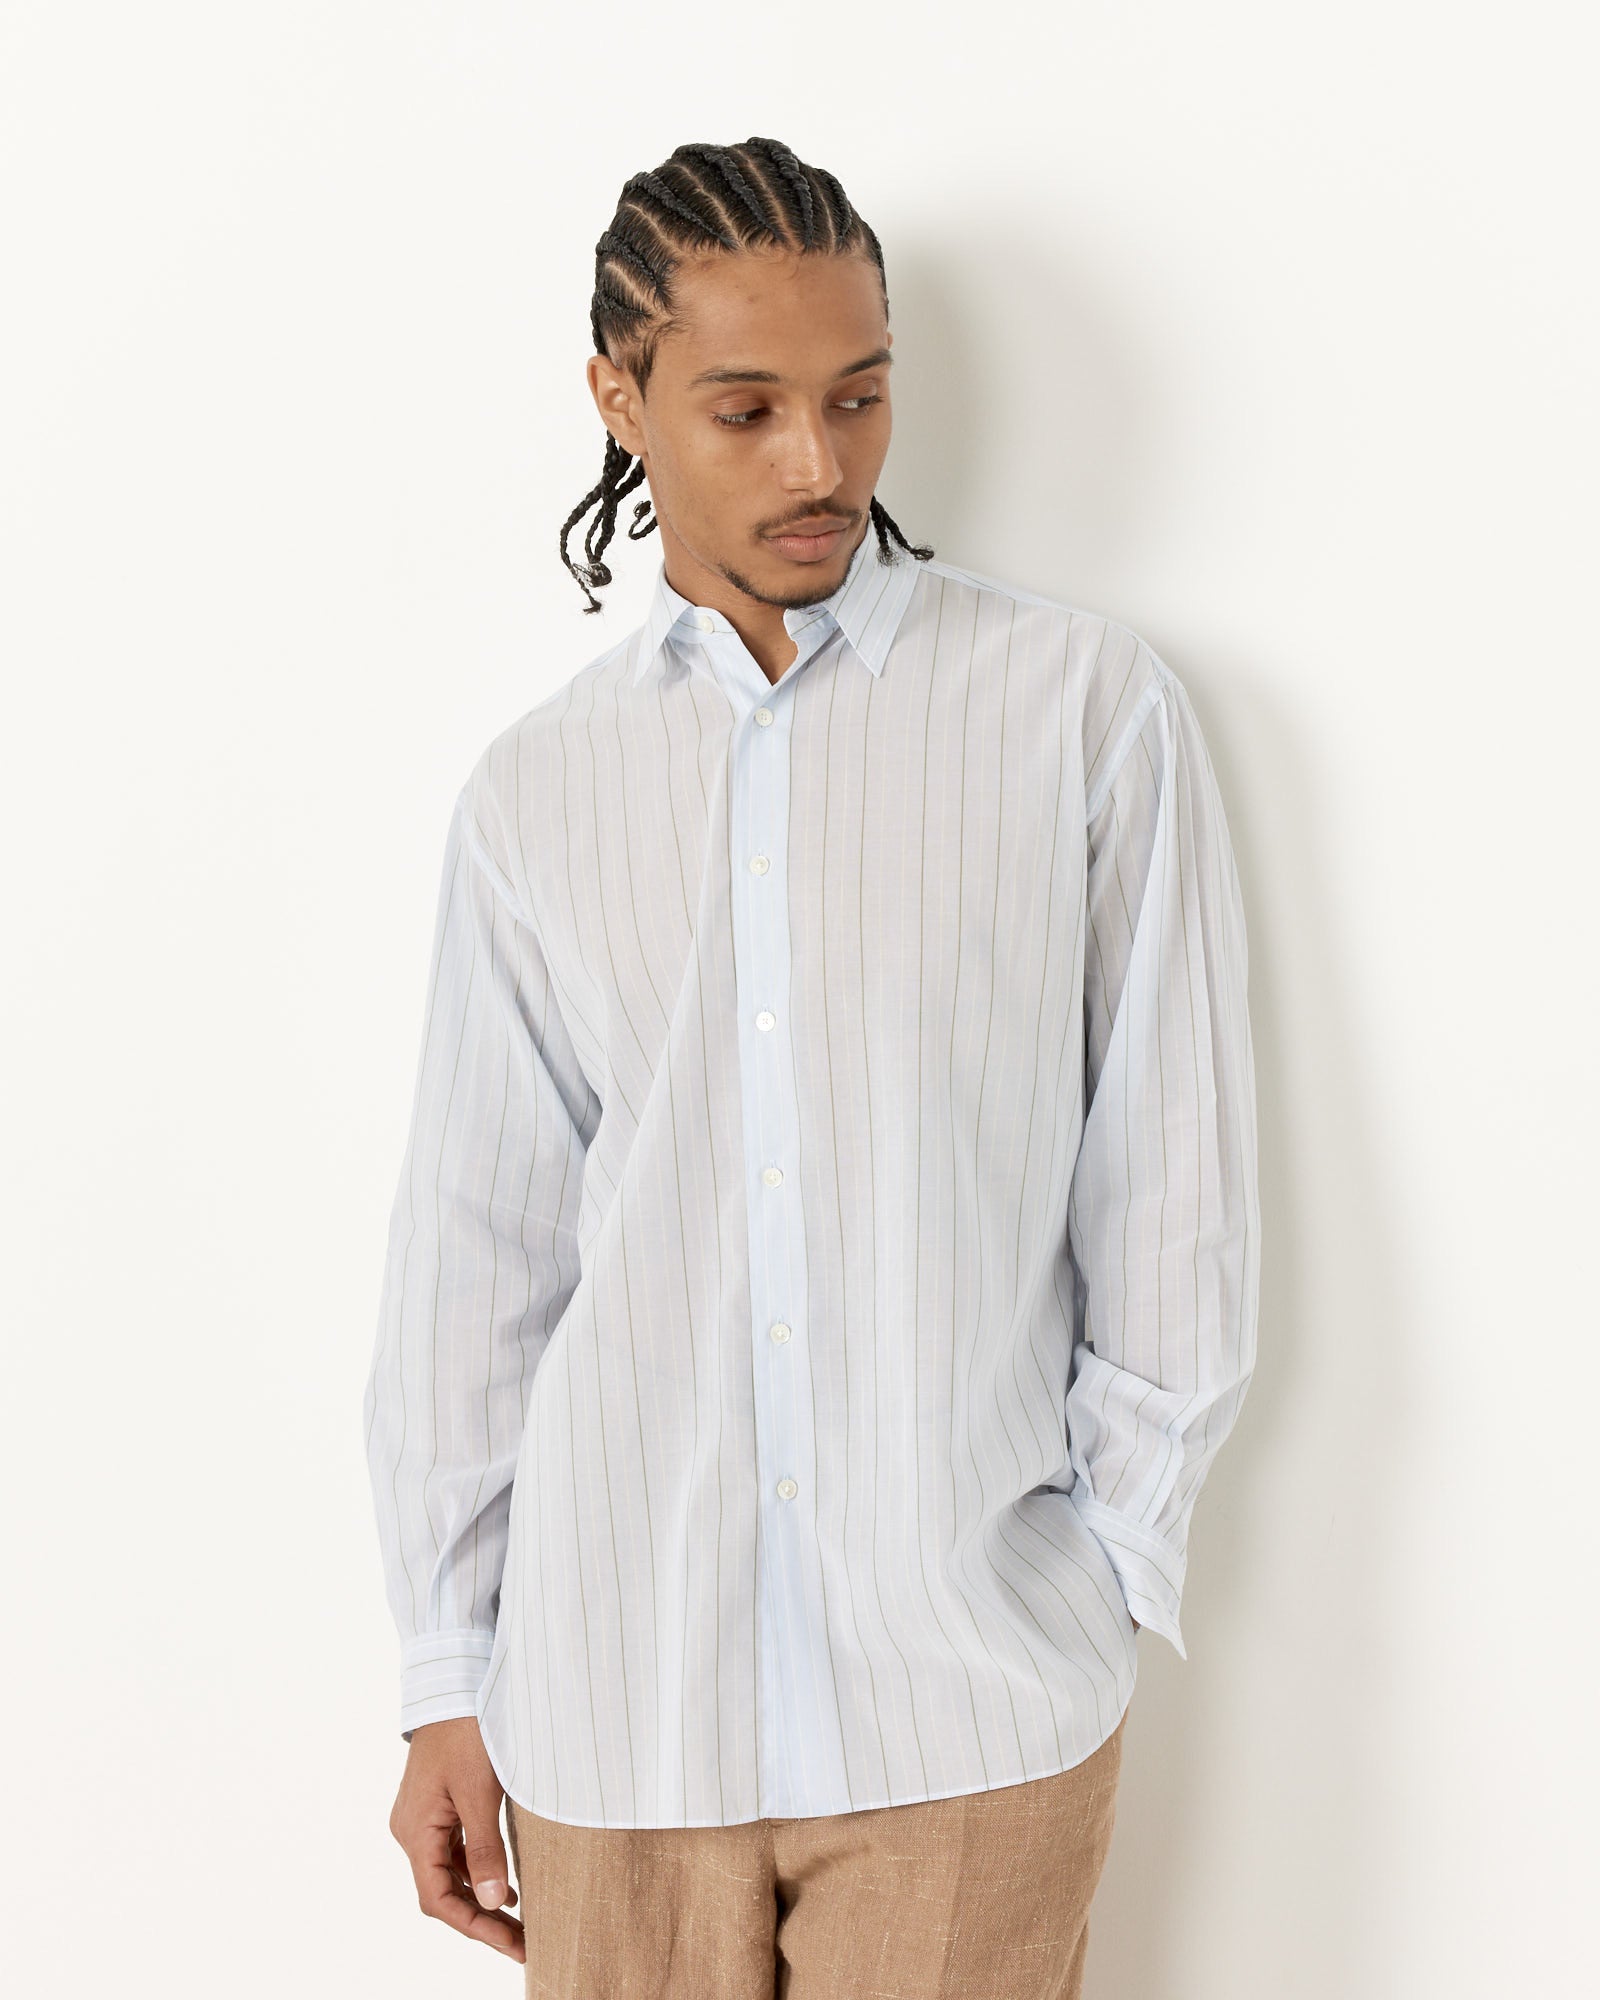 Organdy Stripe Shirt in Light Blue